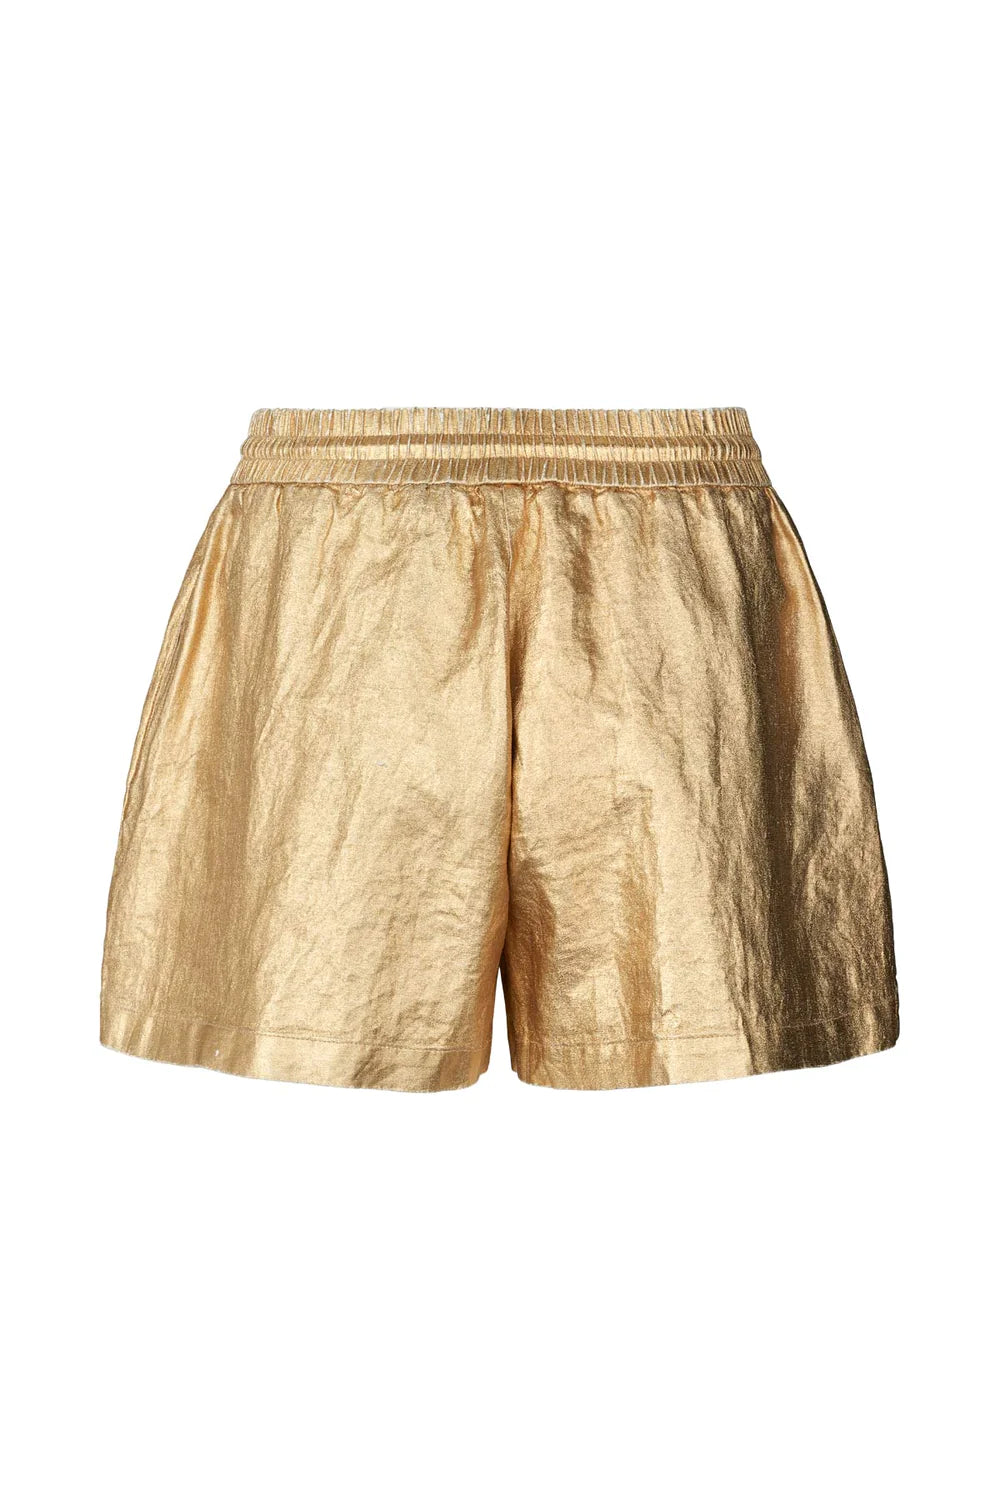 Olu midas shorts in gold